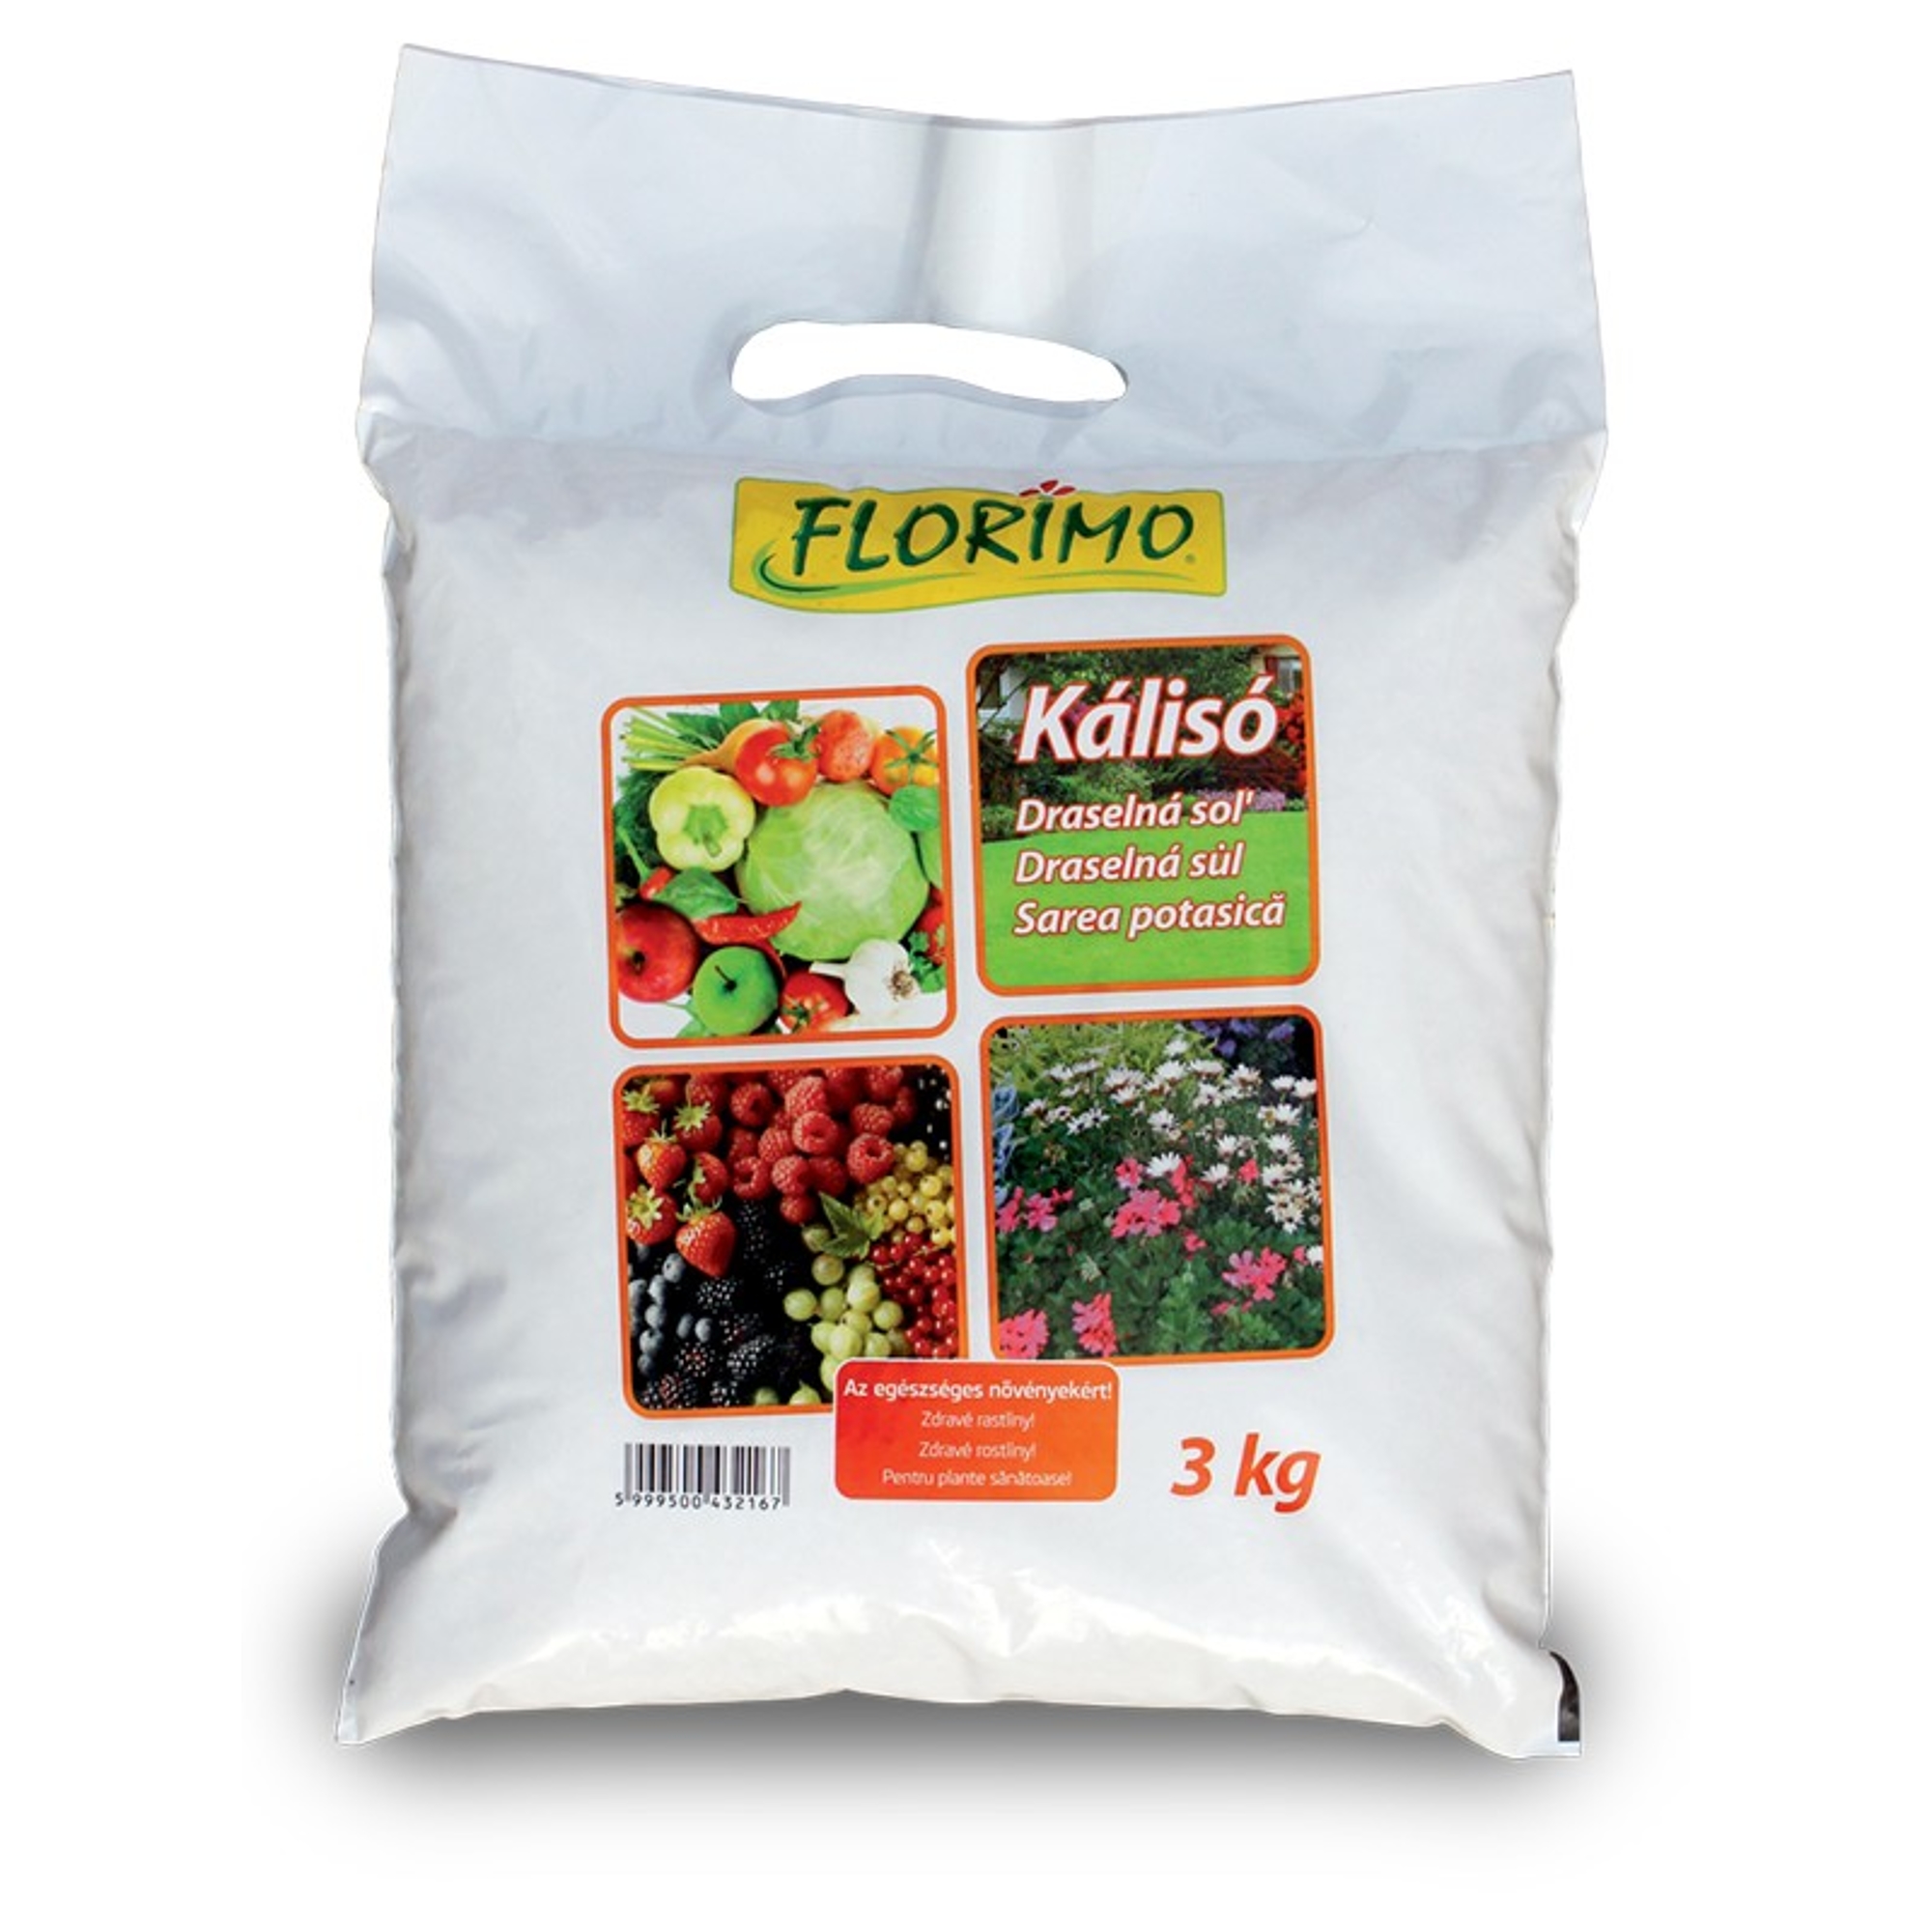 FLORIMO Kálisó 60% 3 kg